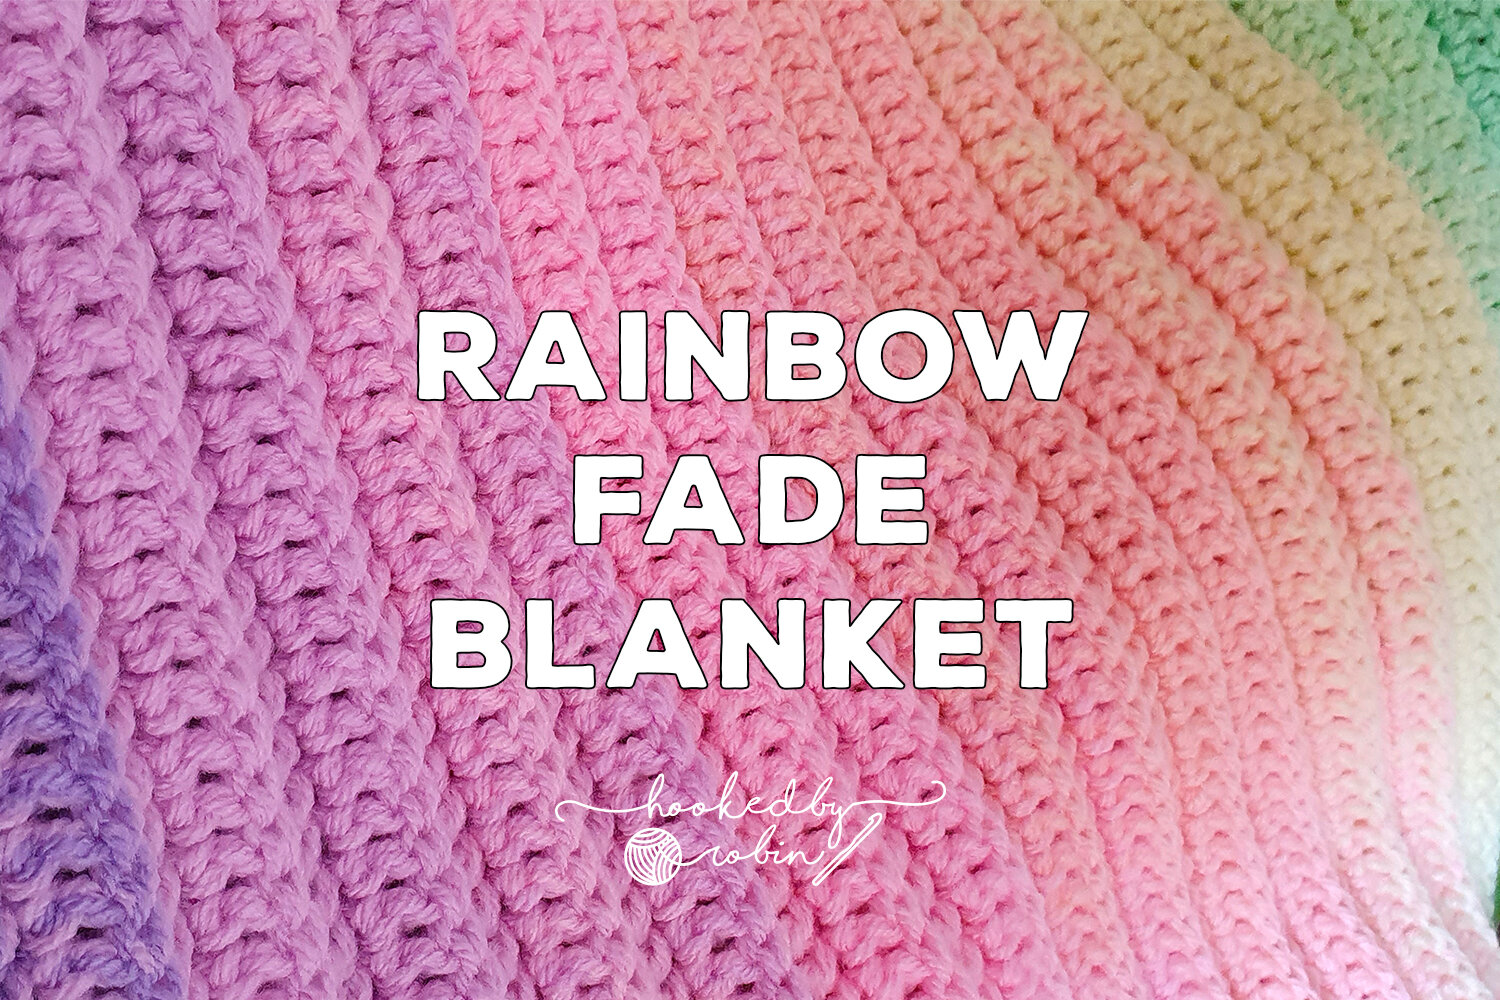 Beautiful Ombre Crochet Baby Blankets - Pattern Center